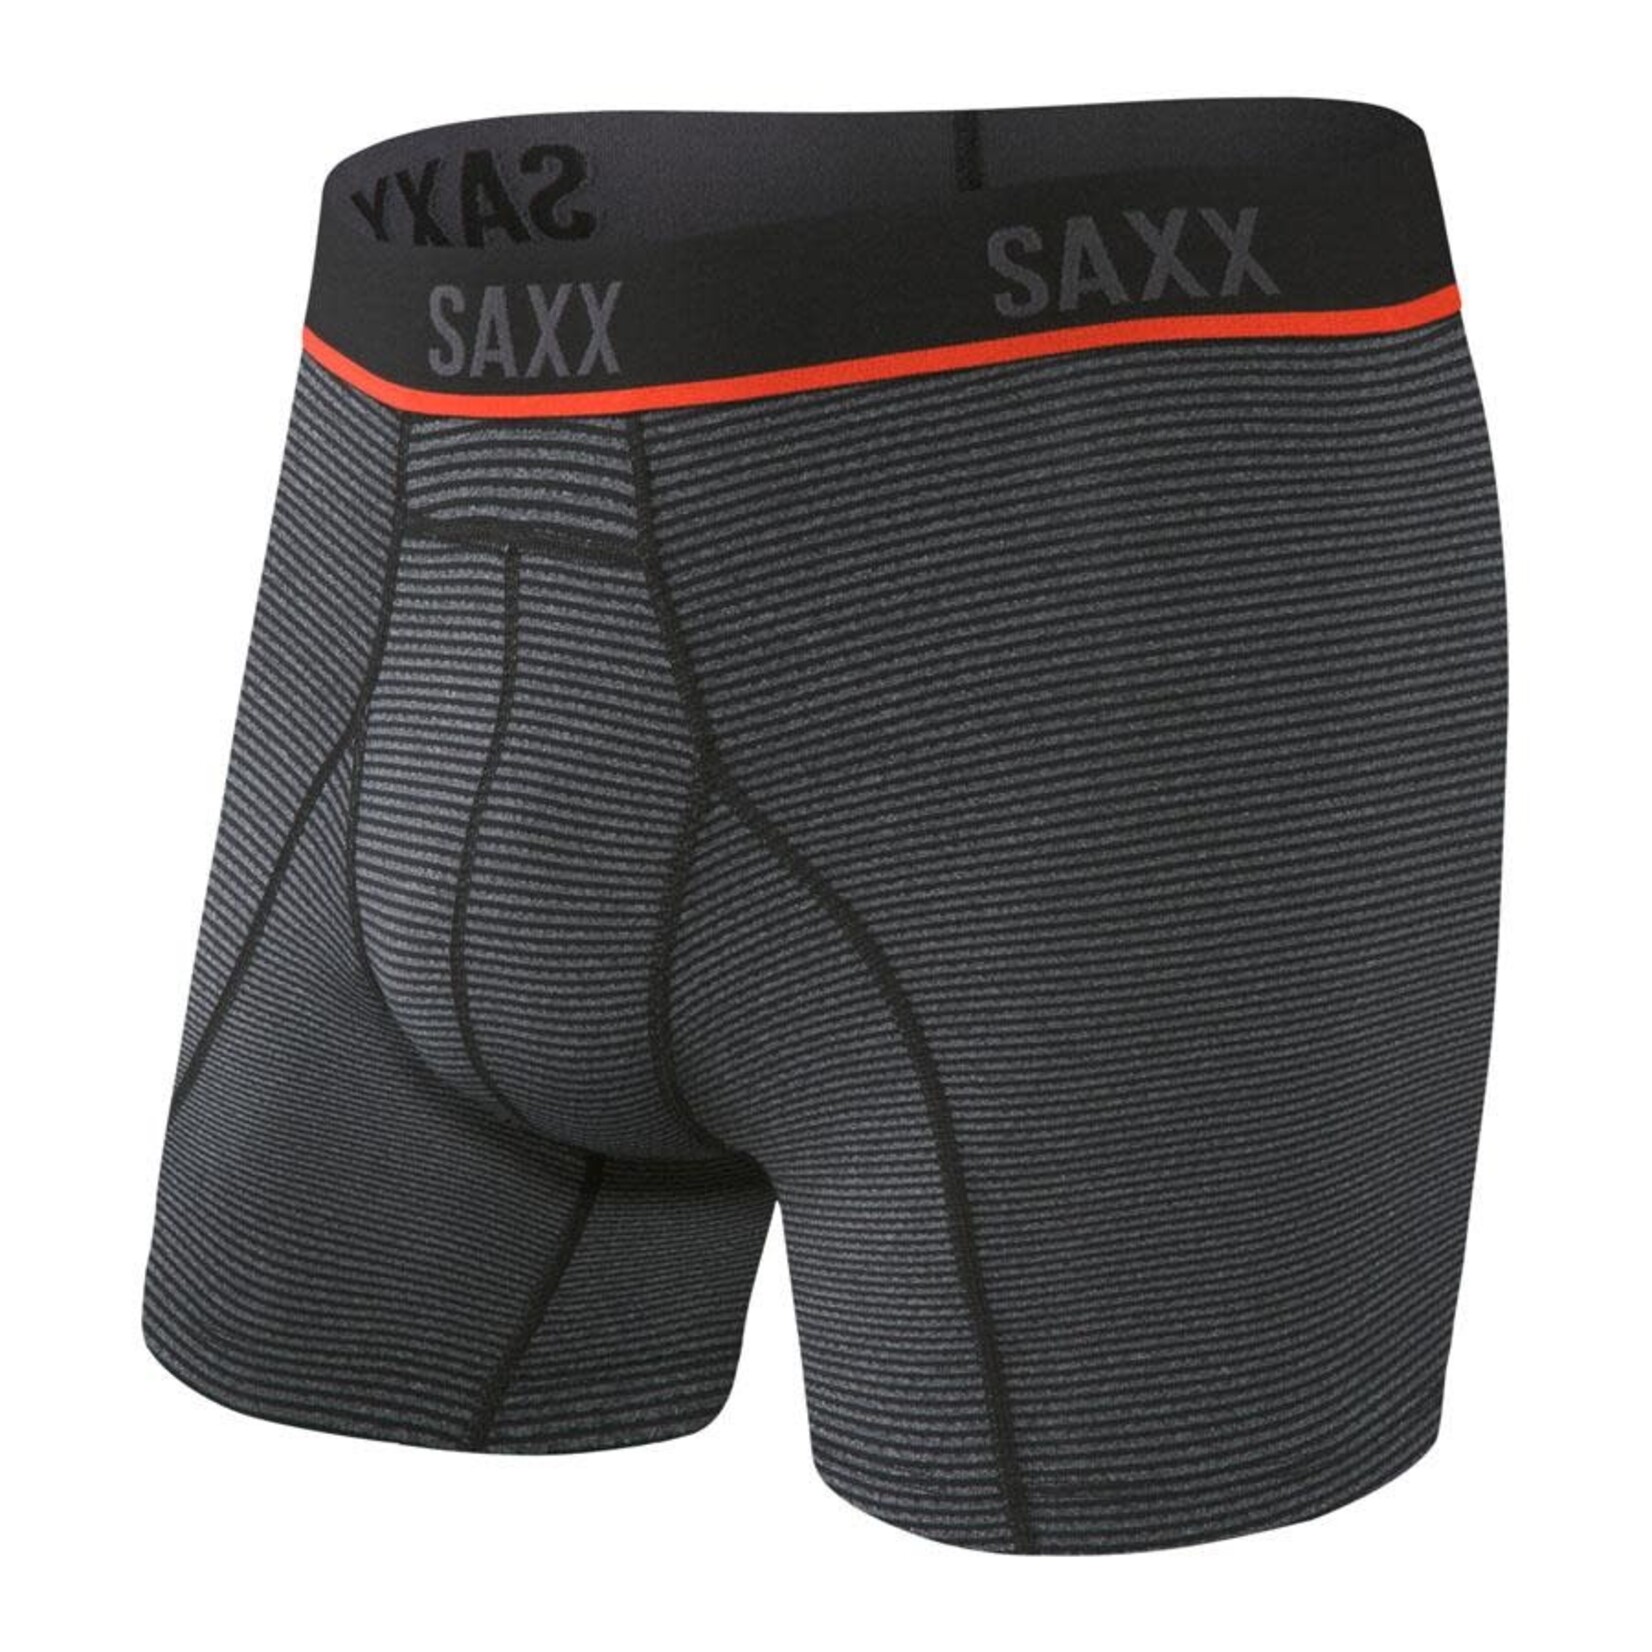 https://cdn.shoplightspeed.com/shops/641570/files/36976833/1652x1652x1/saxx-saxx-underwear-kinetic-hd-boxer-brief-mens-gf.jpg